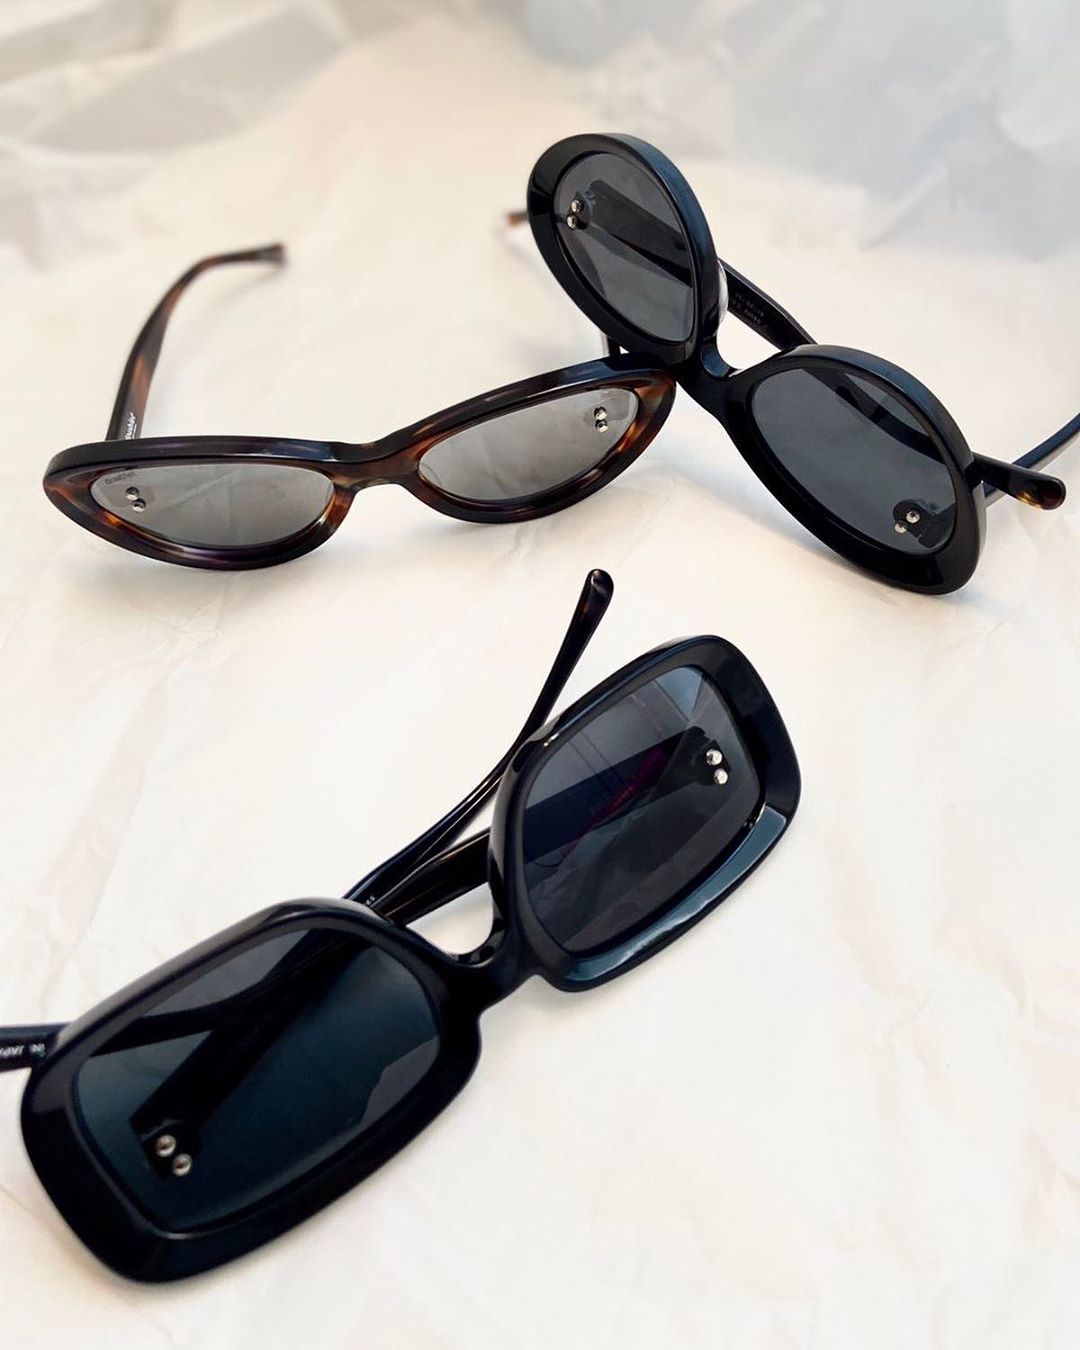 SVMOSCOW Online Concept Store - Дебютная линия очков Doublet доступна в SVMOSCOW

Doublet debut sunglasses line is available at SVMOSCOW

#svmoscow #doublet